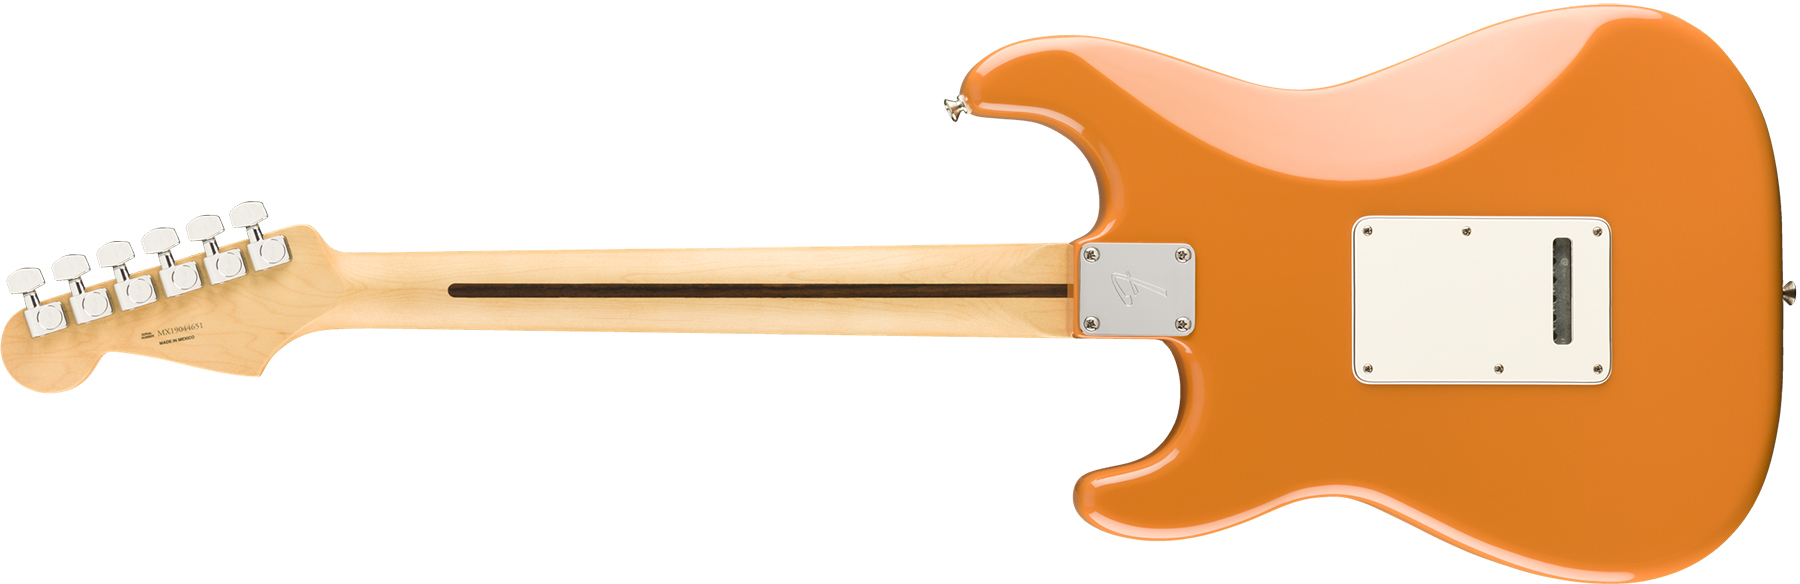 Fender Strat Player Mex Sss Mn - Capri Orange - Guitarra eléctrica con forma de str. - Variation 1